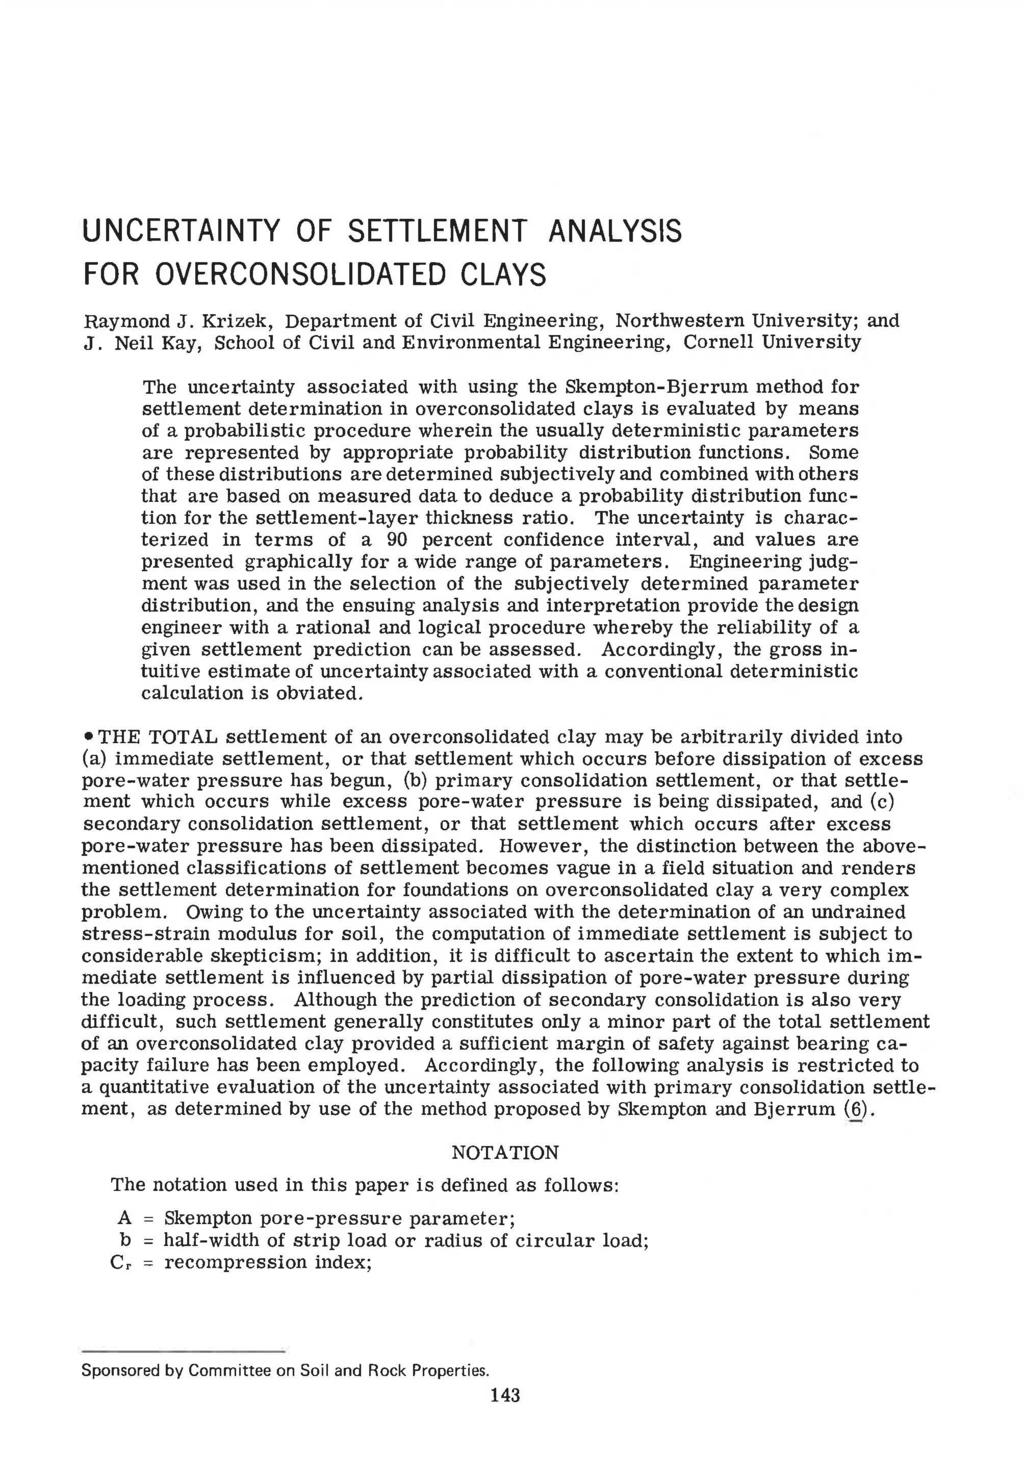 UNCERTAINTY OF SETTLEMENT ANALYSIS FOR OVERCONSOLIDATED CLAYS Raymond J. Krizek, Department of Civil Engineering, Northwestern University; J.